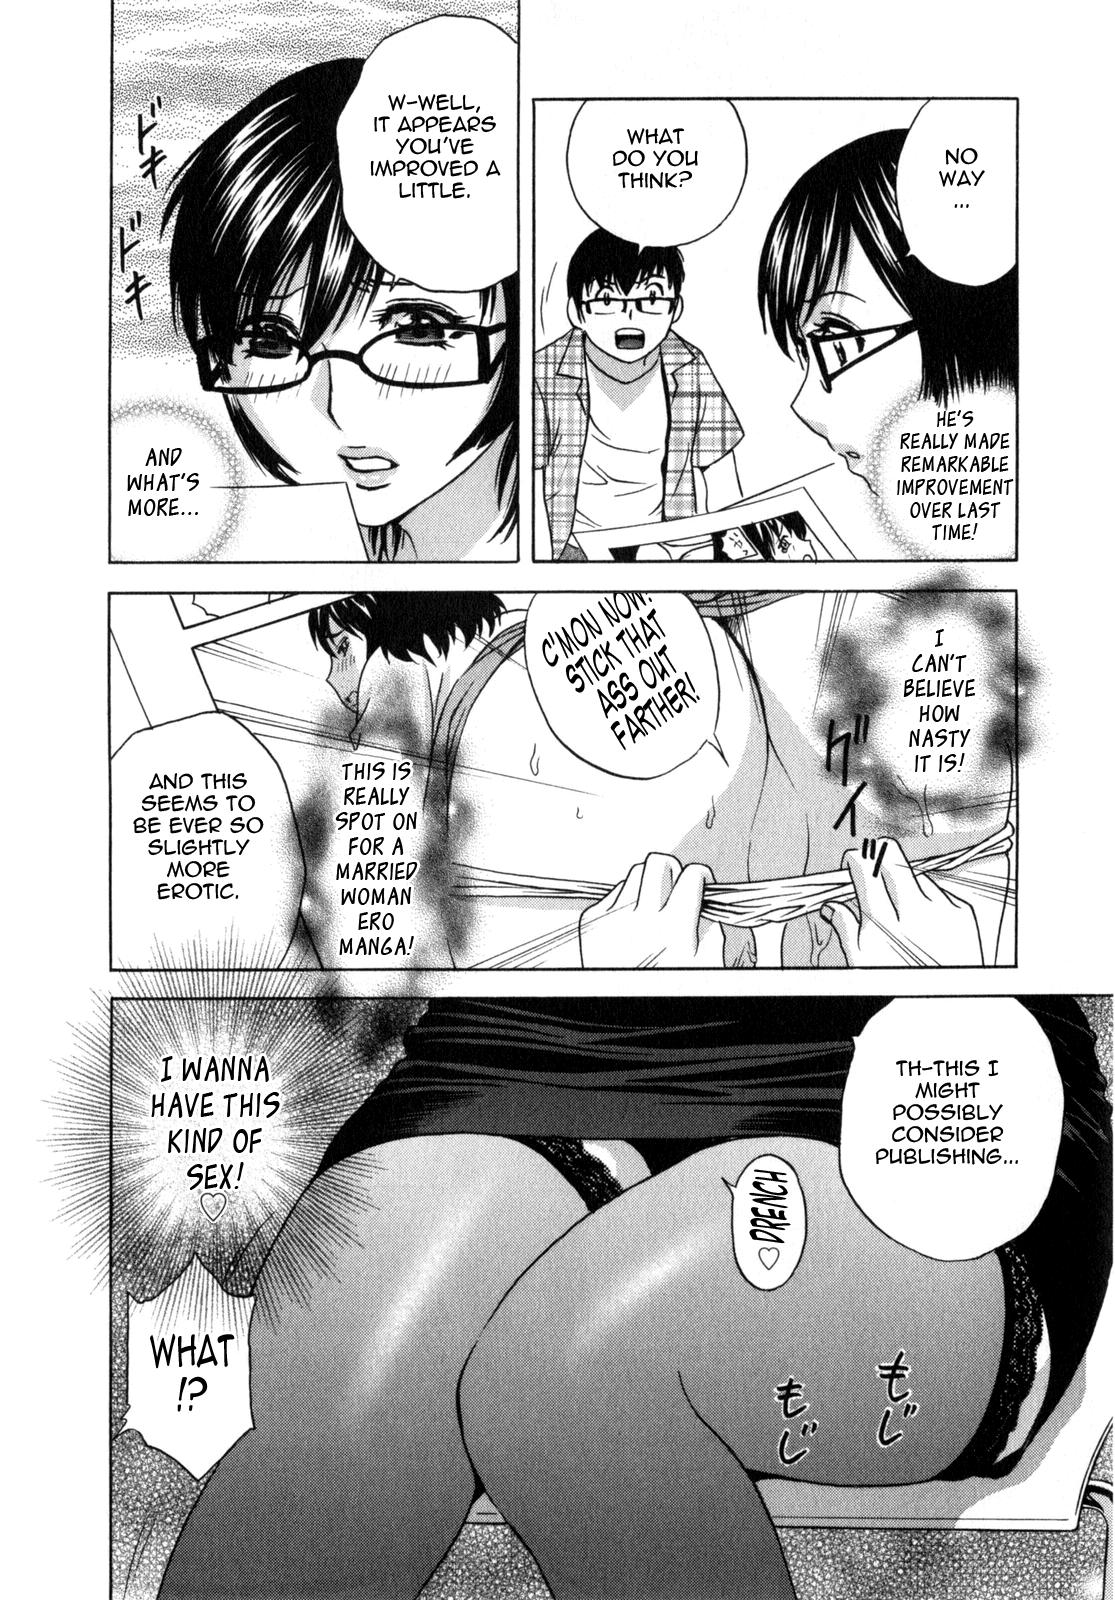 [Hidemaru] Life with Married Women Just Like a Manga 1 - Ch. 1-8 [English] {Tadanohito} 109